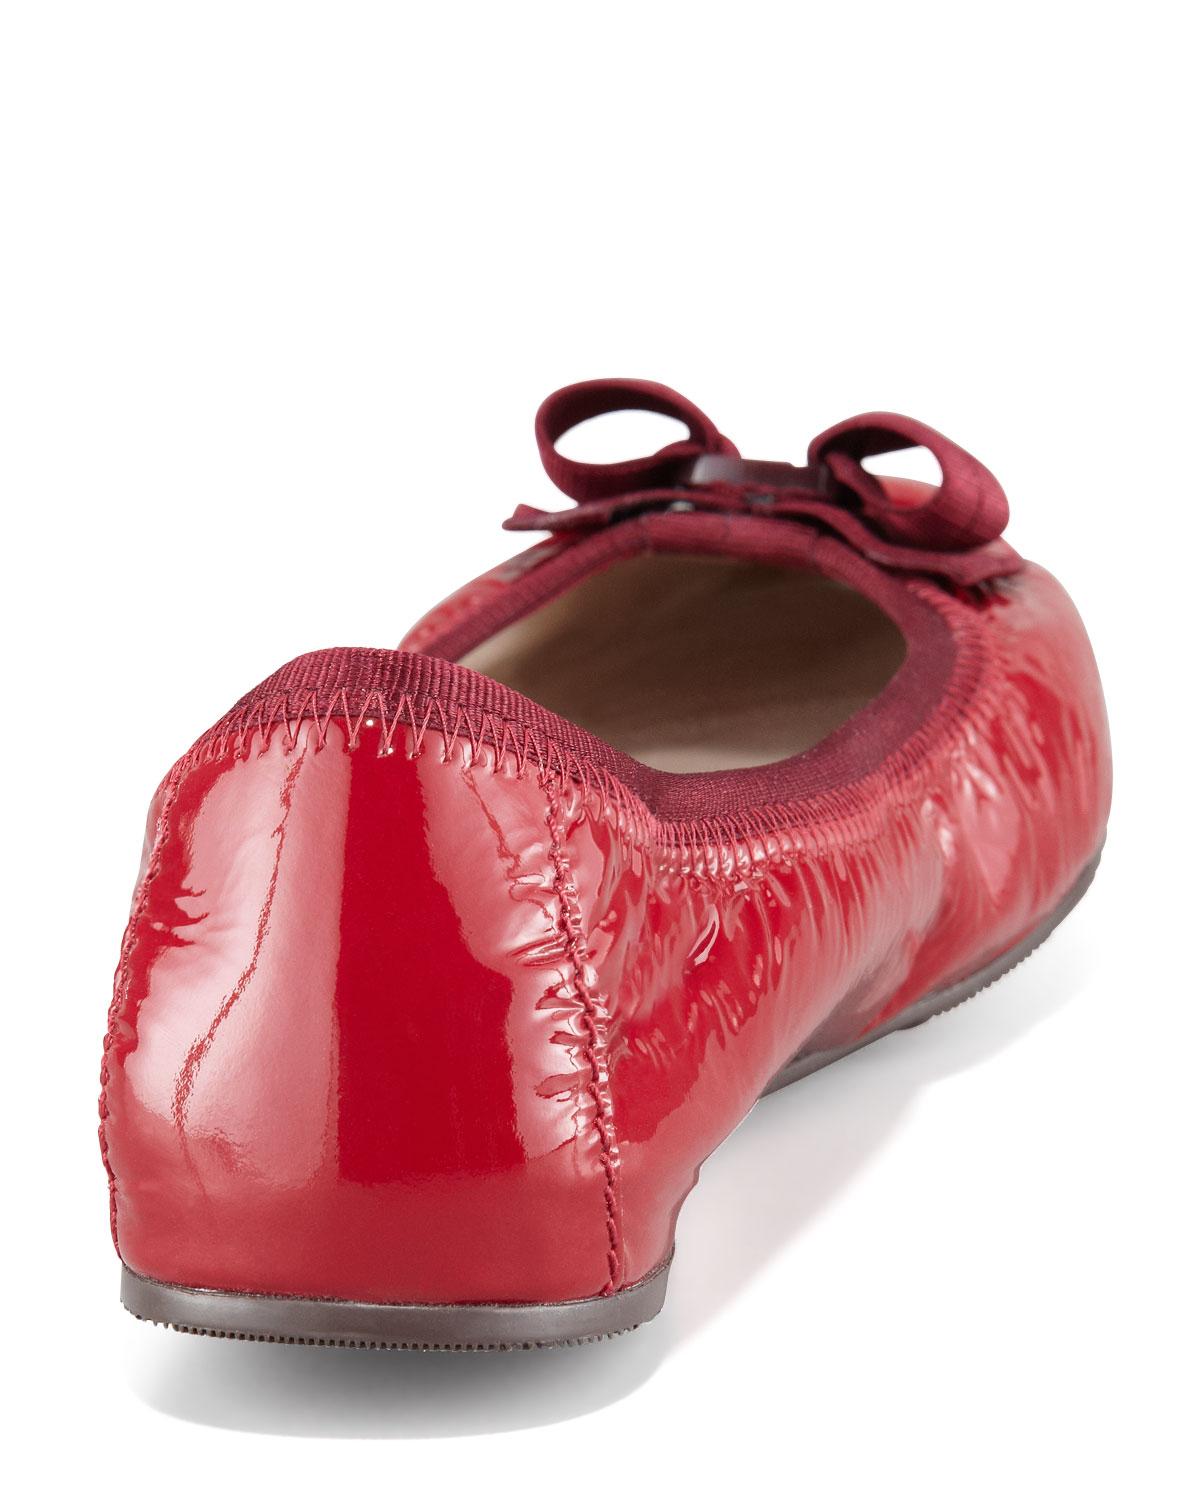 Ferragamo My Joy Patent Leather Ballerina Flat in Nero (Black) (Red) - Lyst